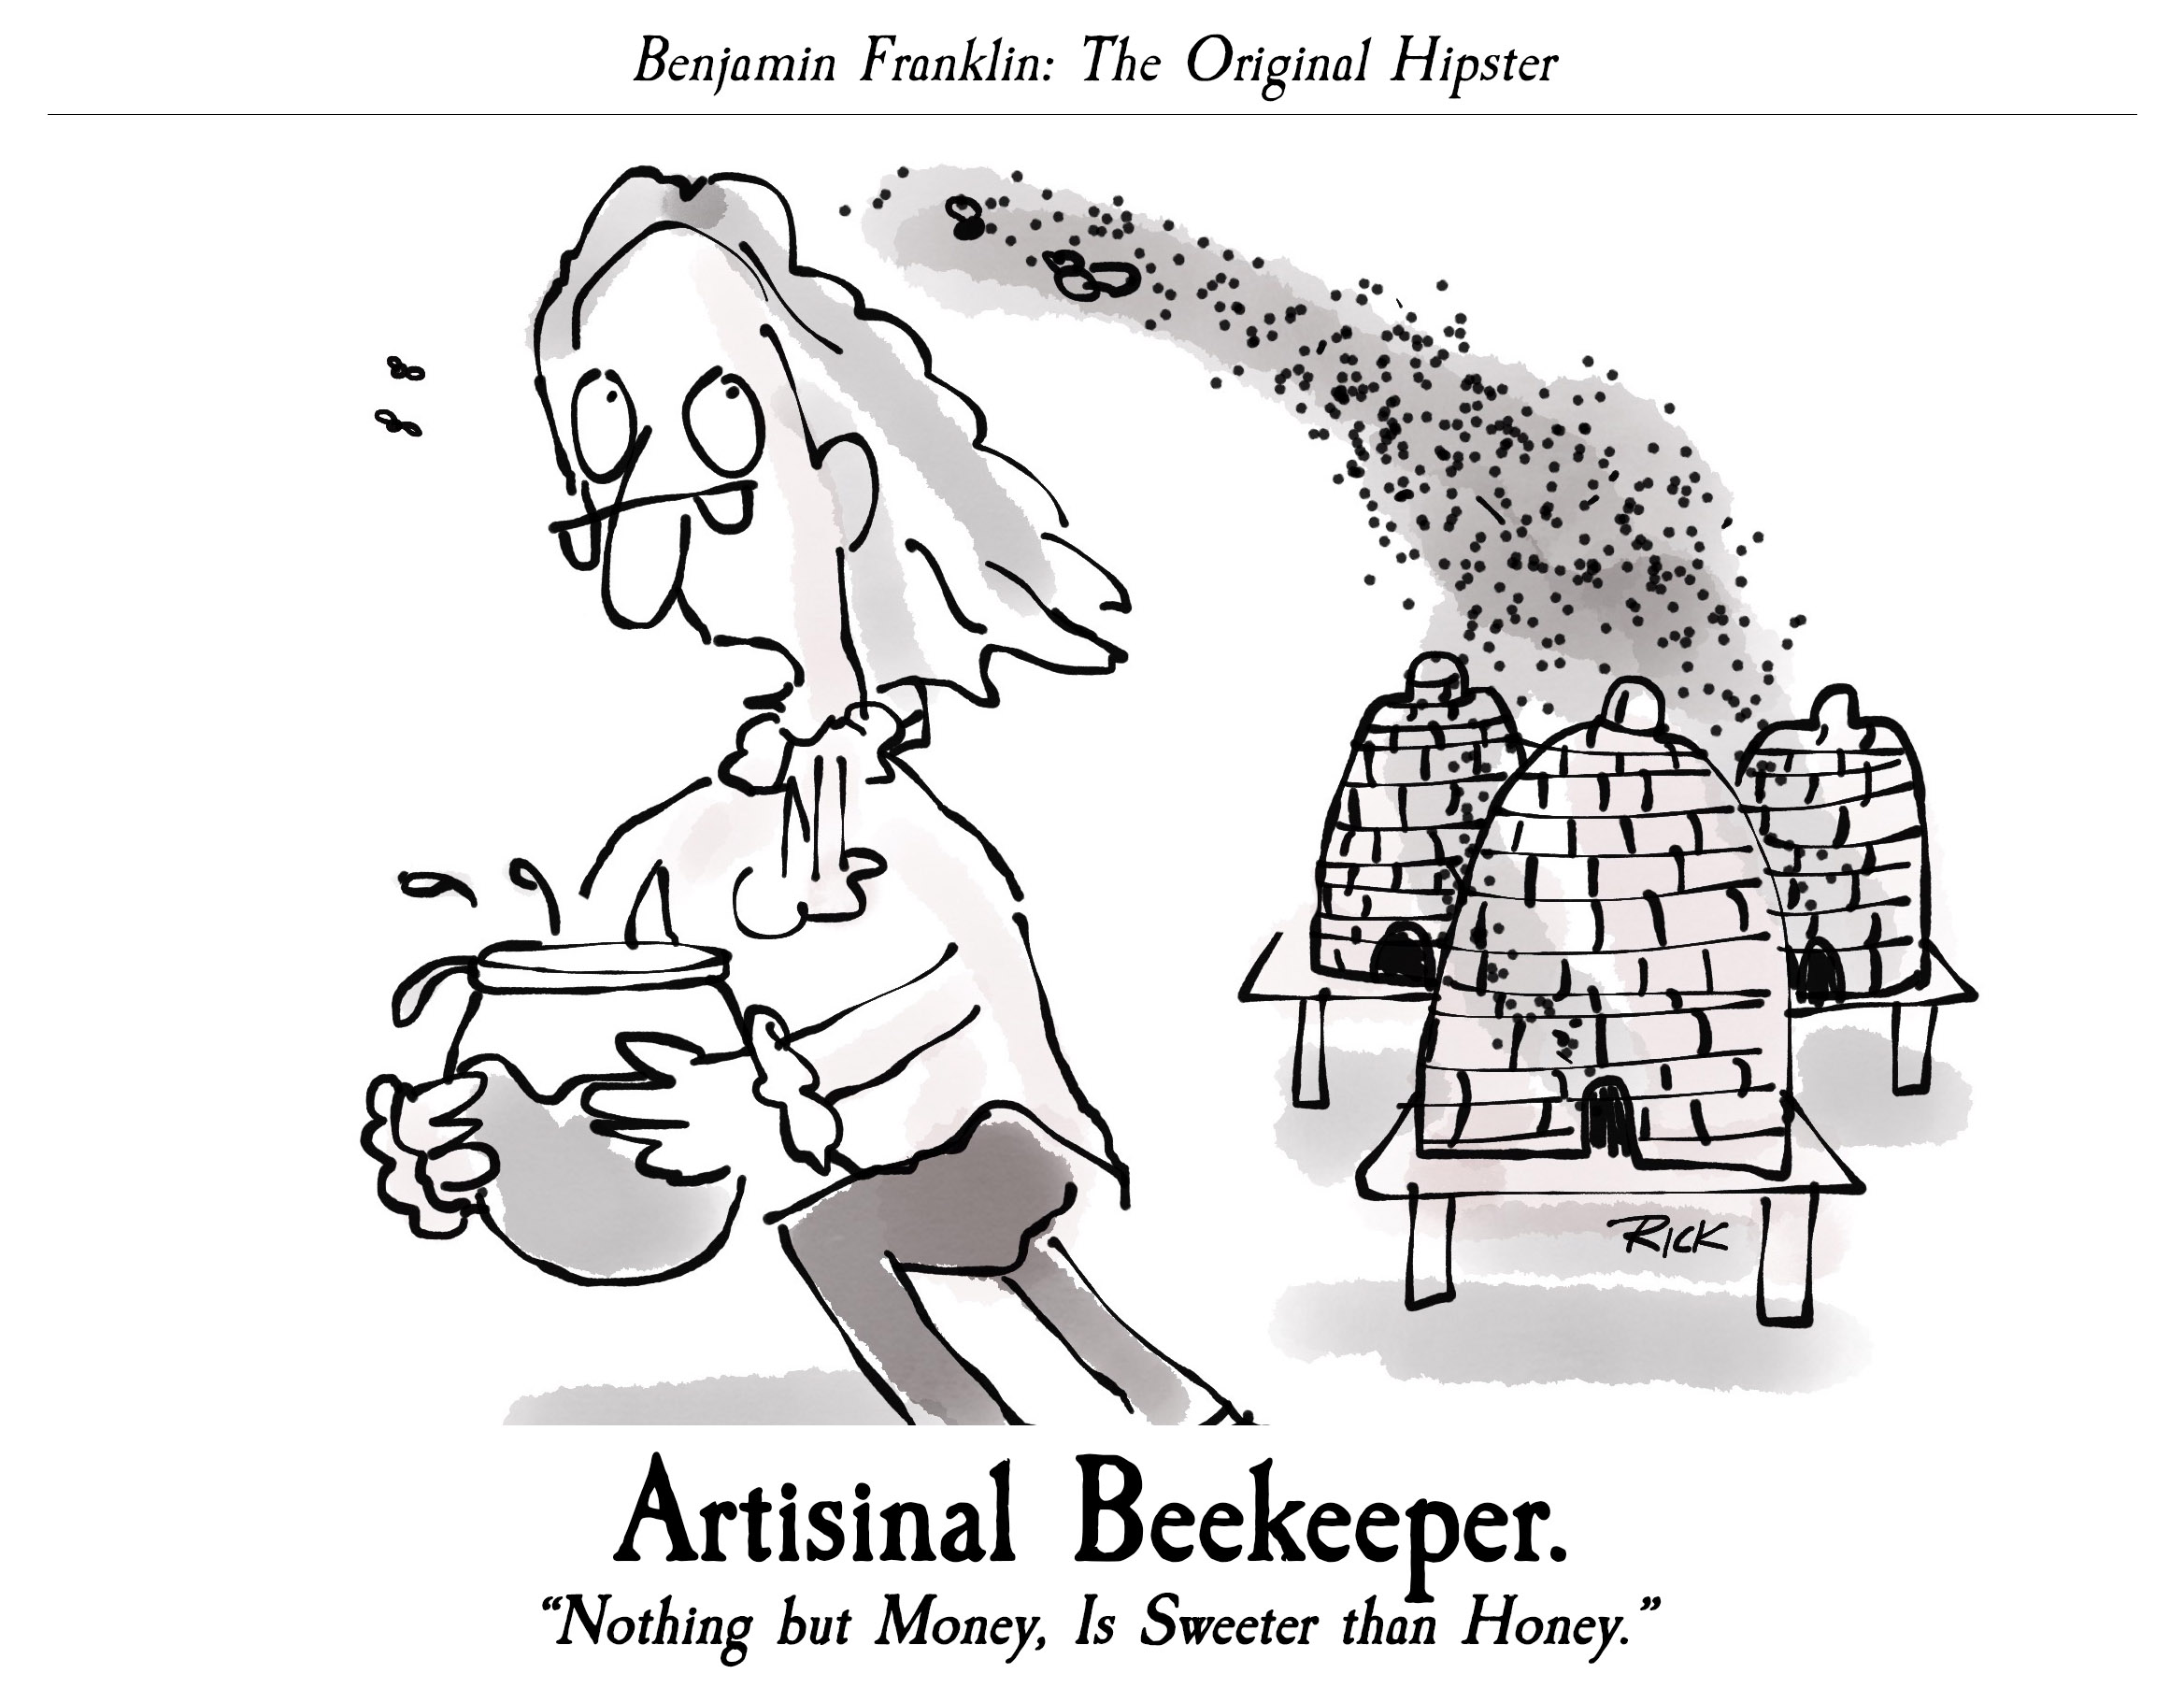 Benjamin Frankin: Artisinal Beekeeper